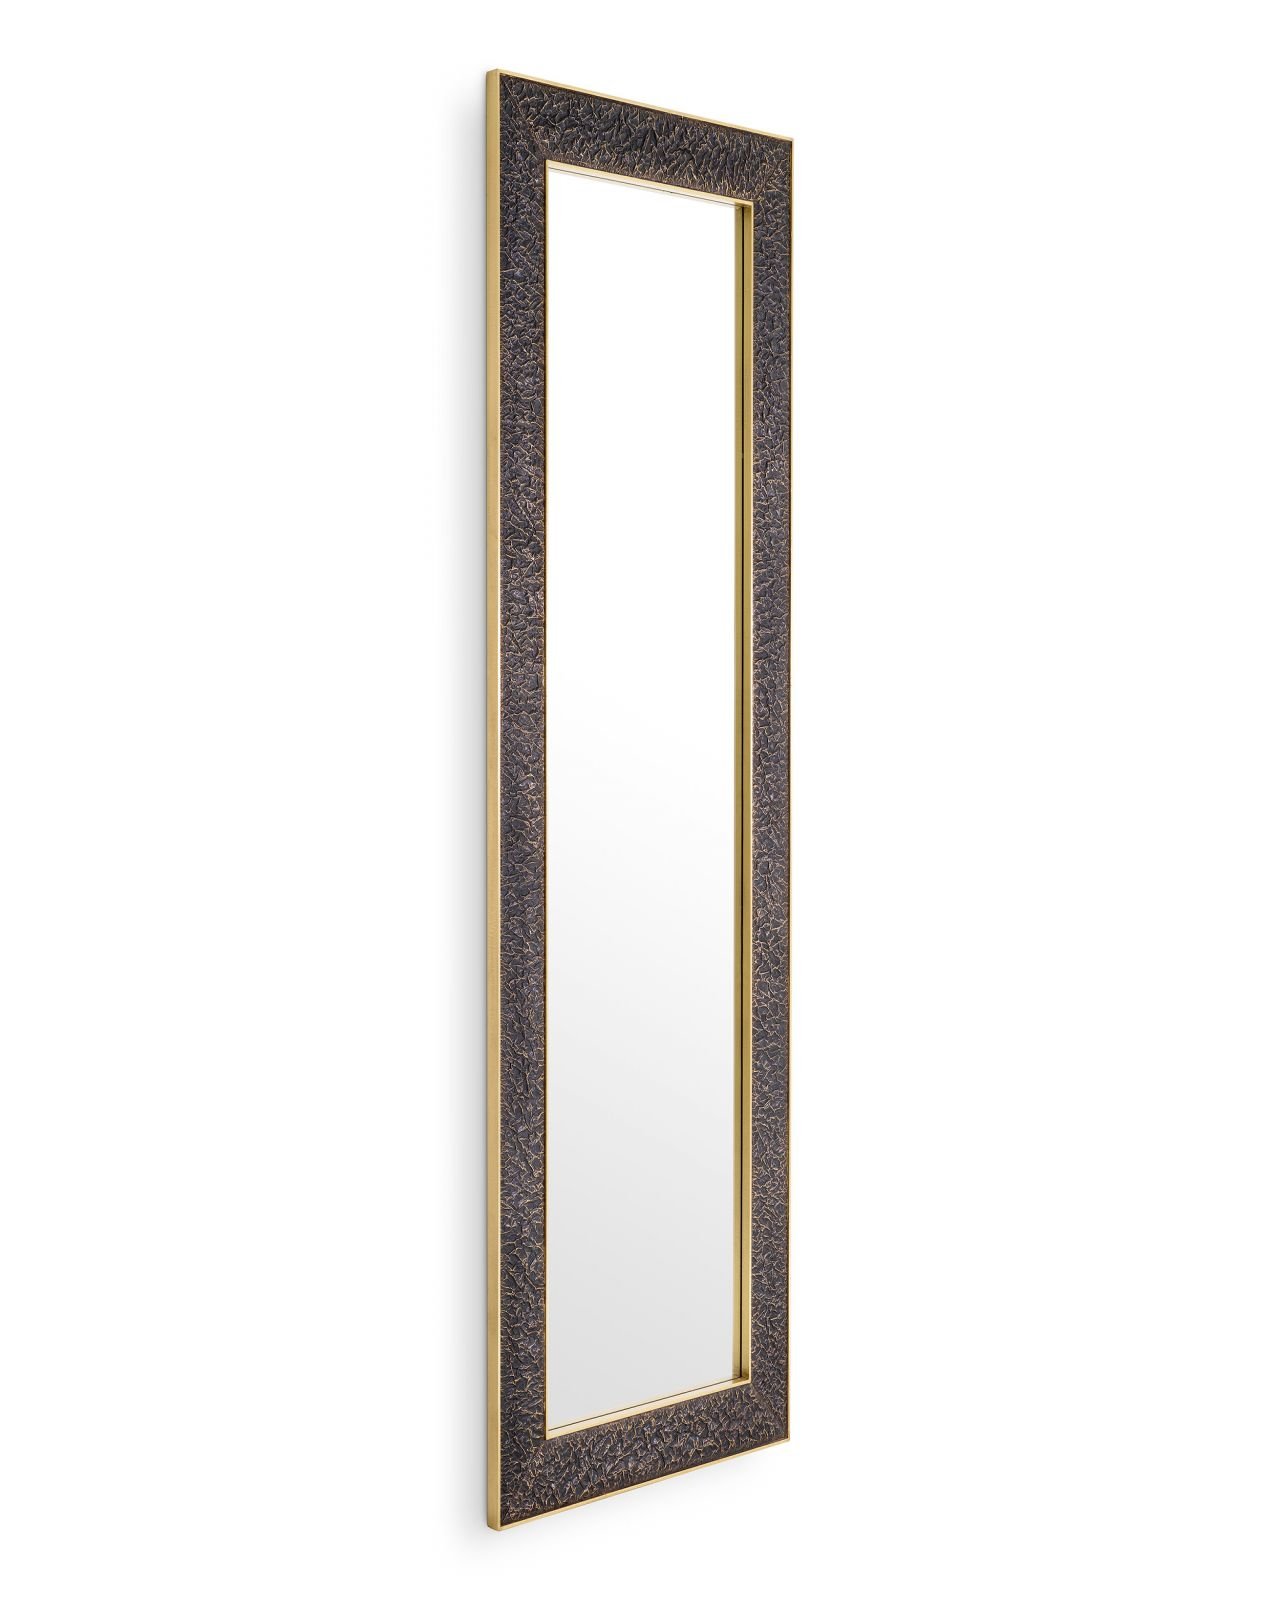 Risto mirror rectangular